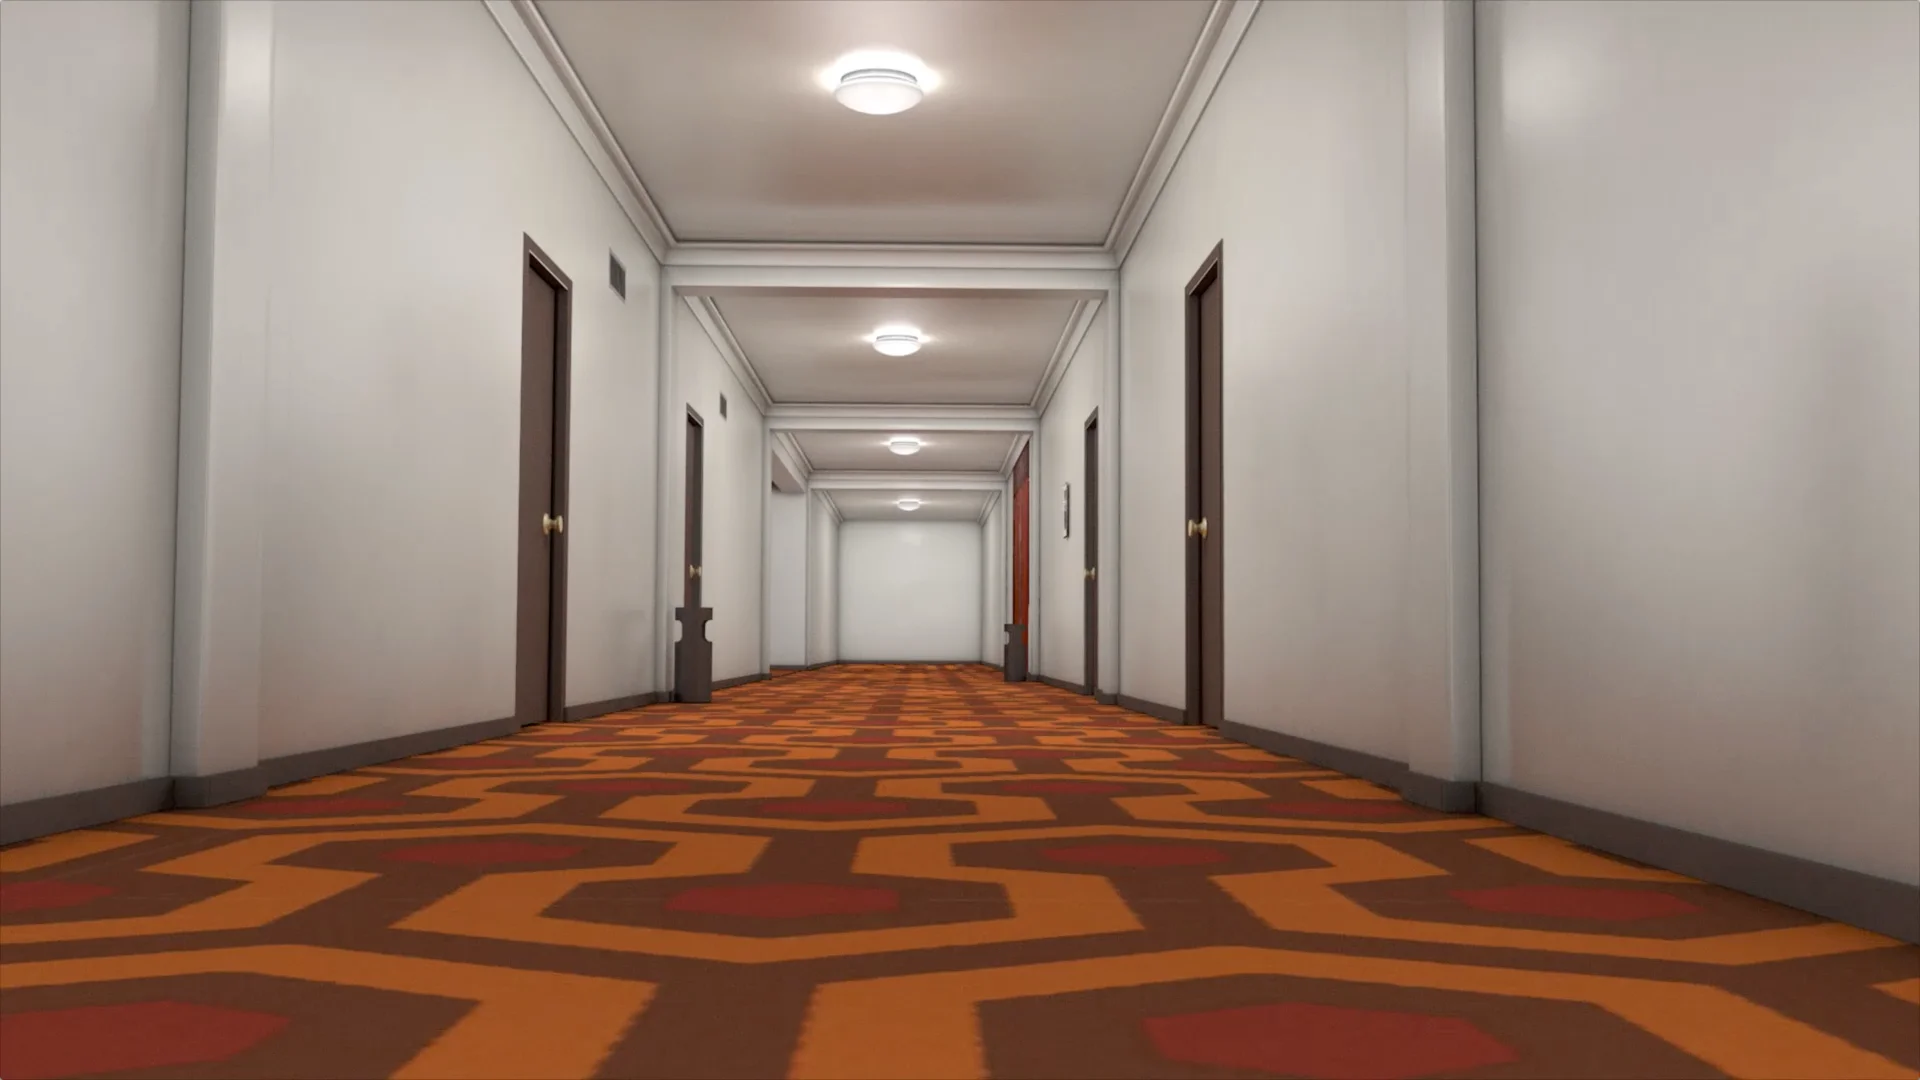 the shining hallway